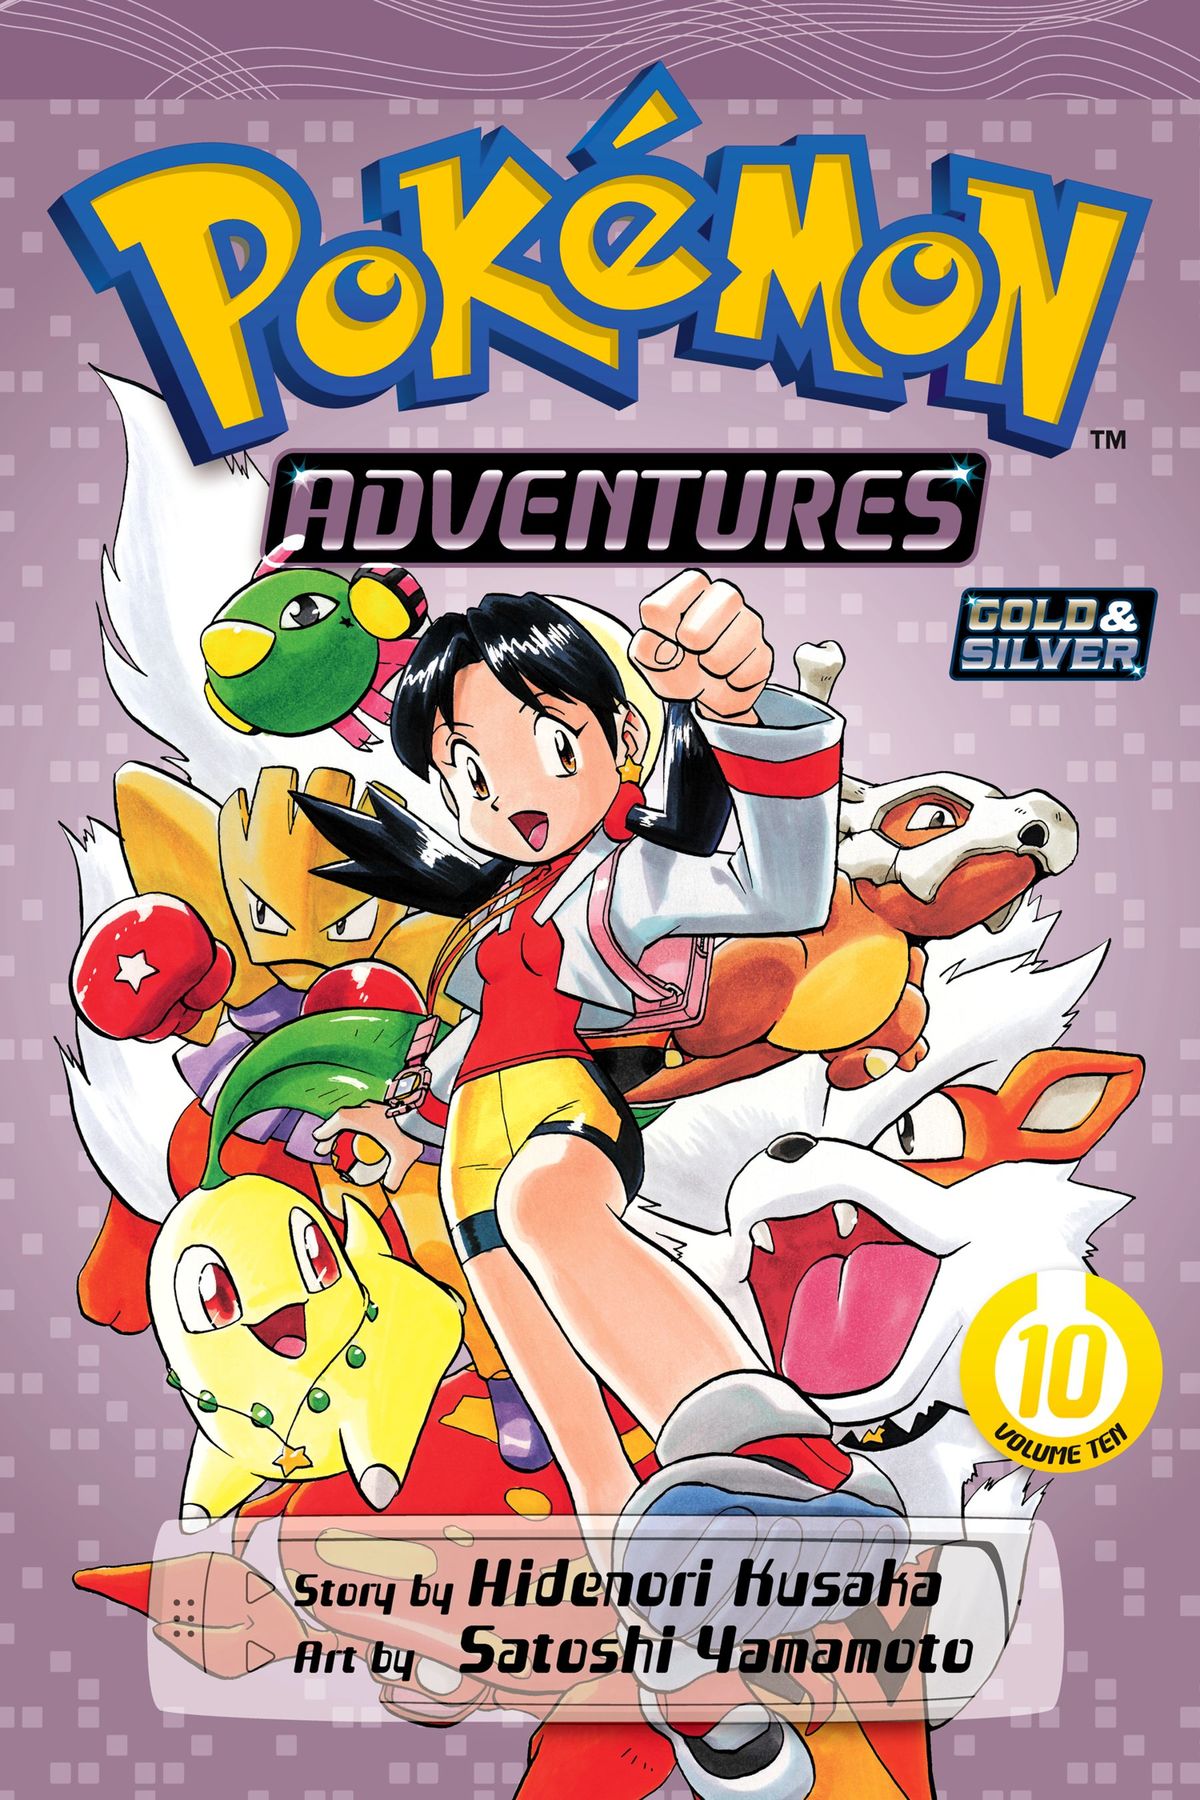 Pokémon: Sword & Shield, Vol. 5, Book by Hidenori Kusaka, Satoshi Yamamoto, Official Publisher Page